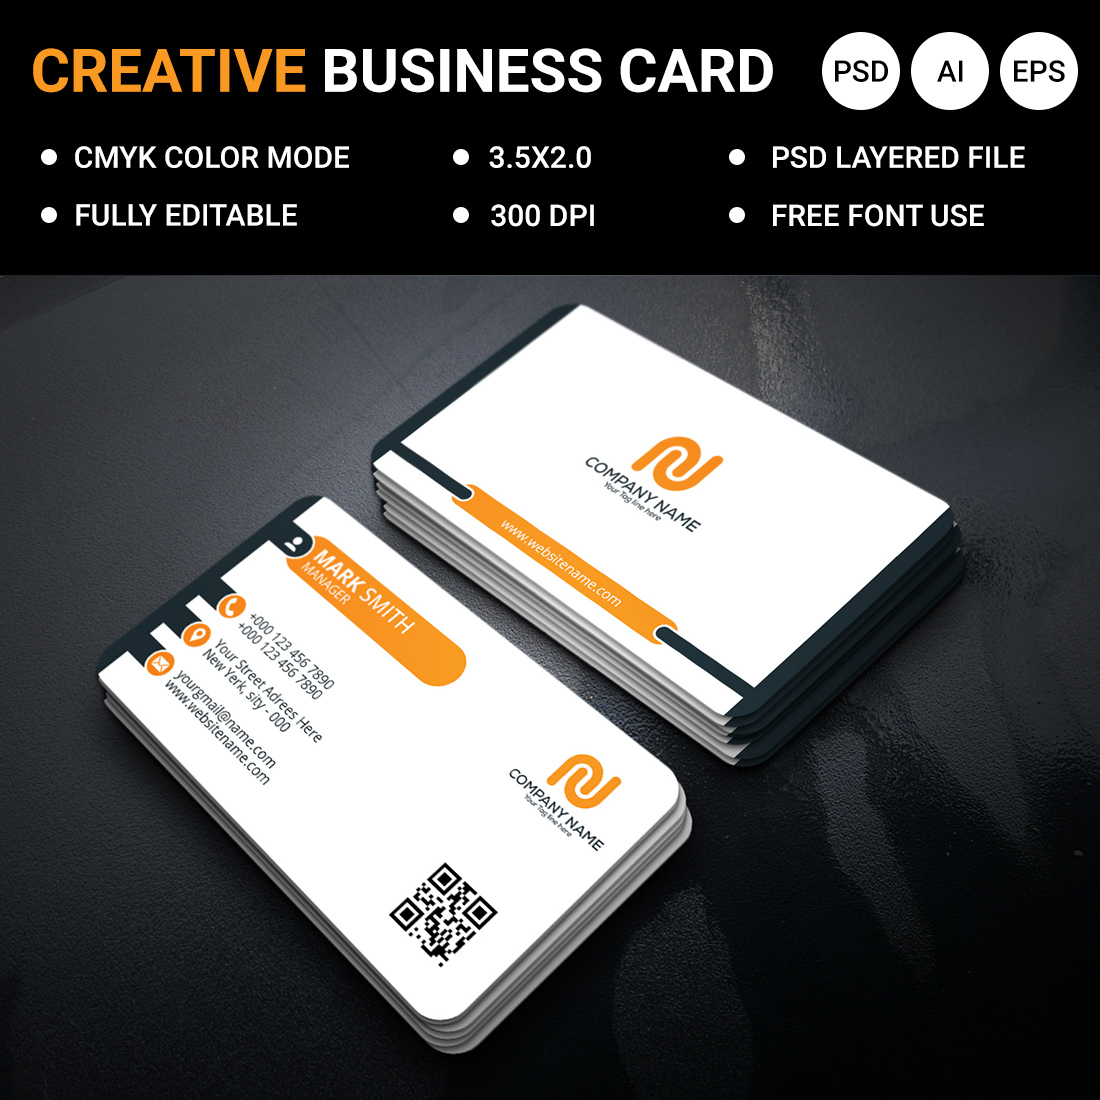 Modern and creative business card design template psd file, eps file, ai file cover image.